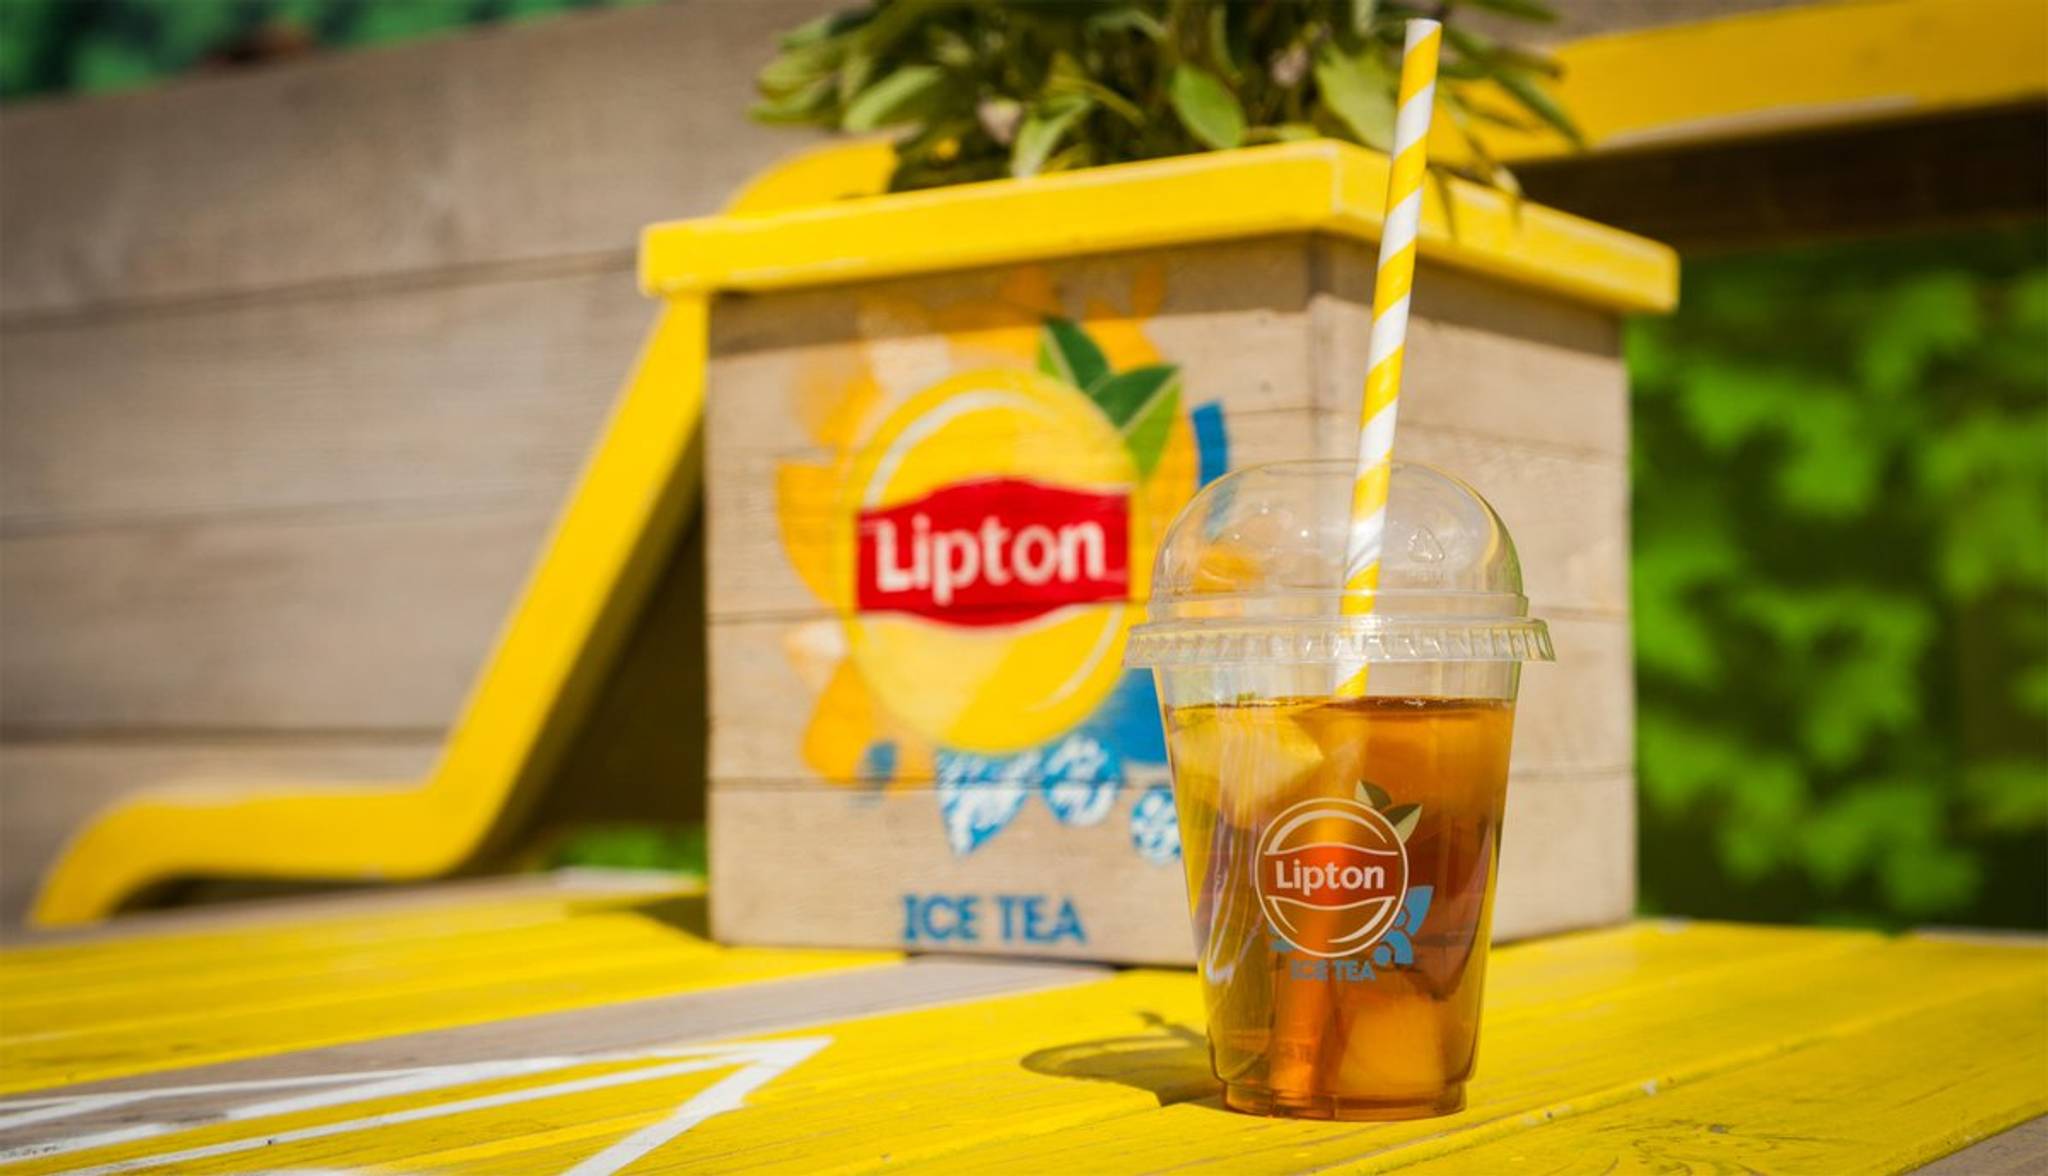 Lipton Ice Tea tests water of social media altruism